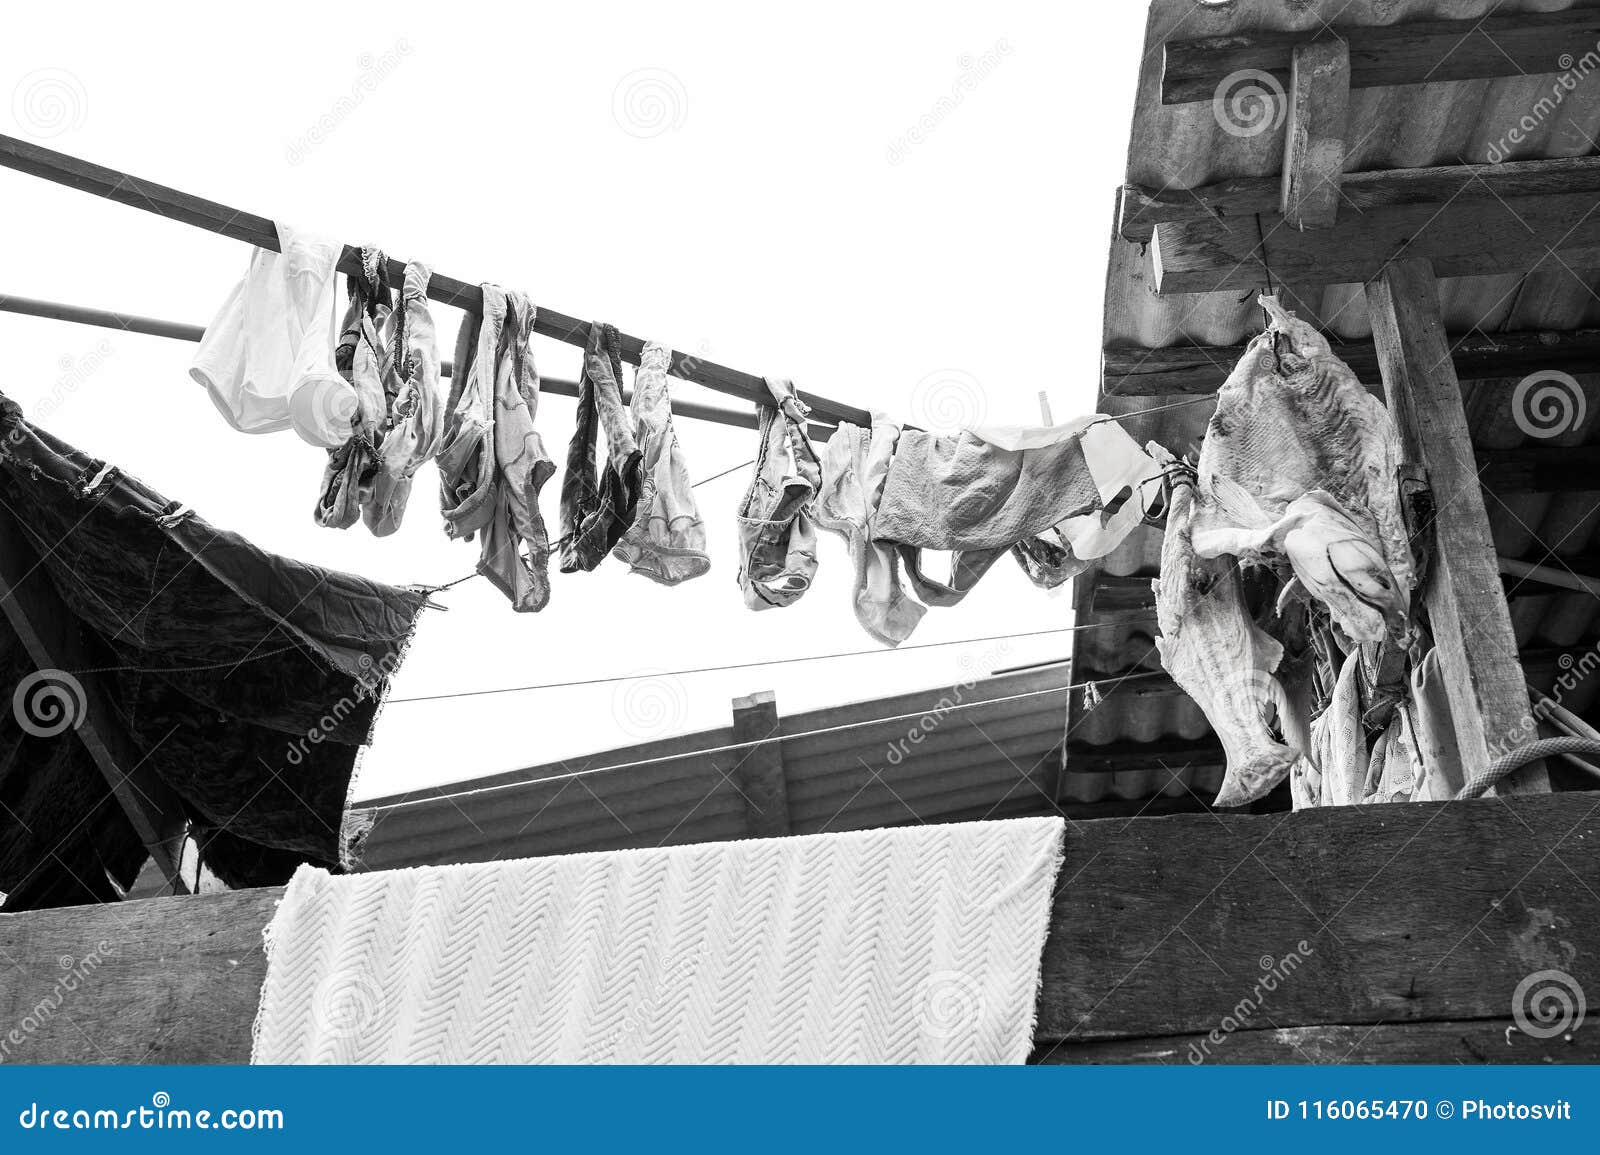 laundry and fish drying in boca de valeria, brazil